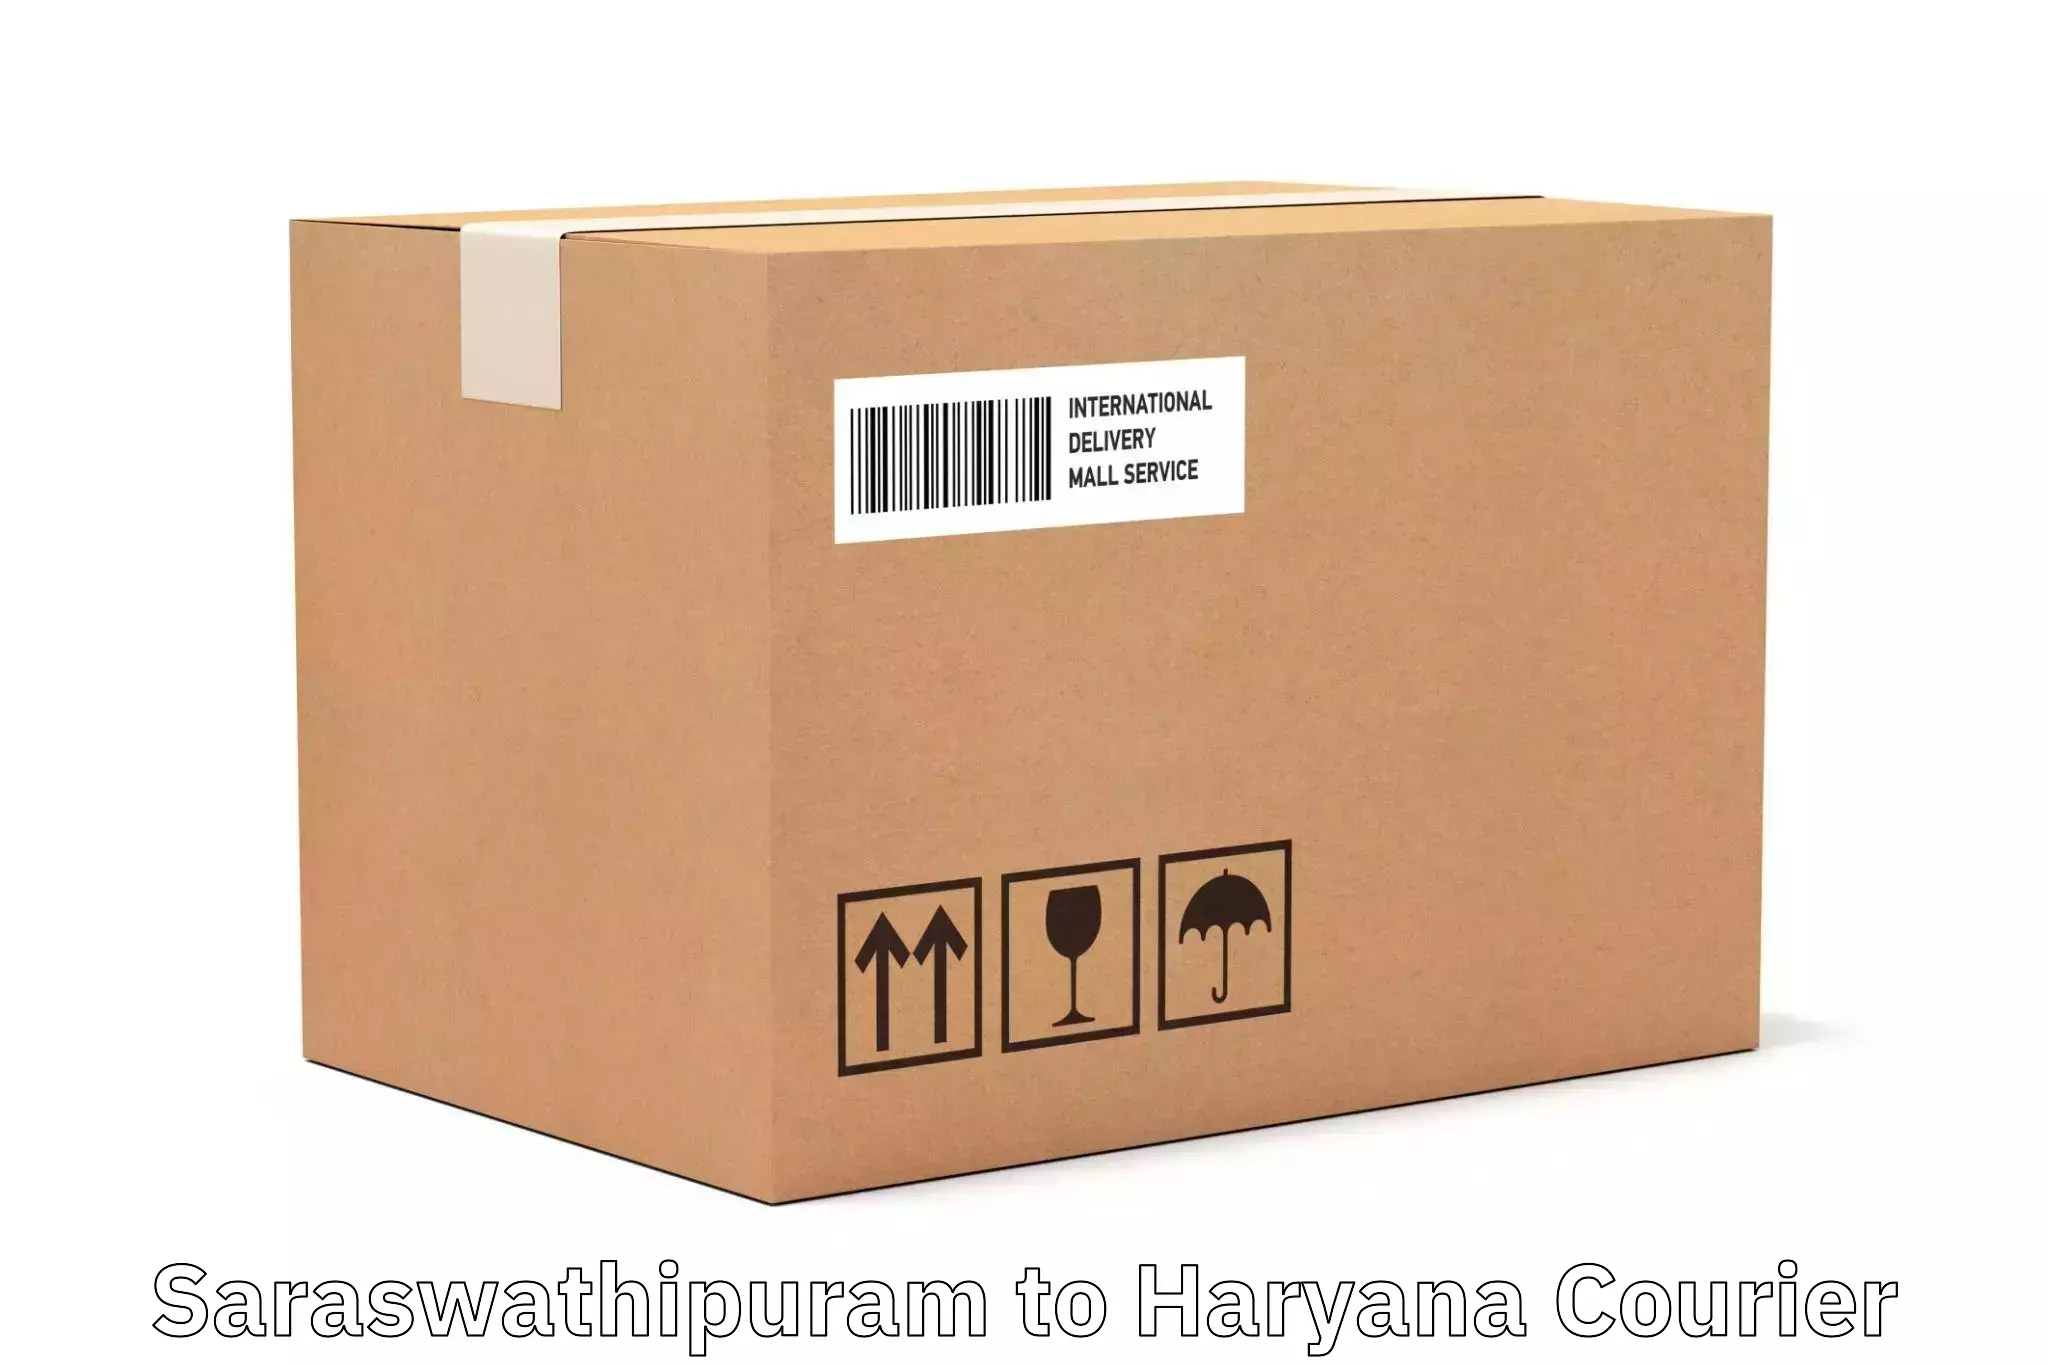 Flexible delivery scheduling Saraswathipuram to Gurgaon